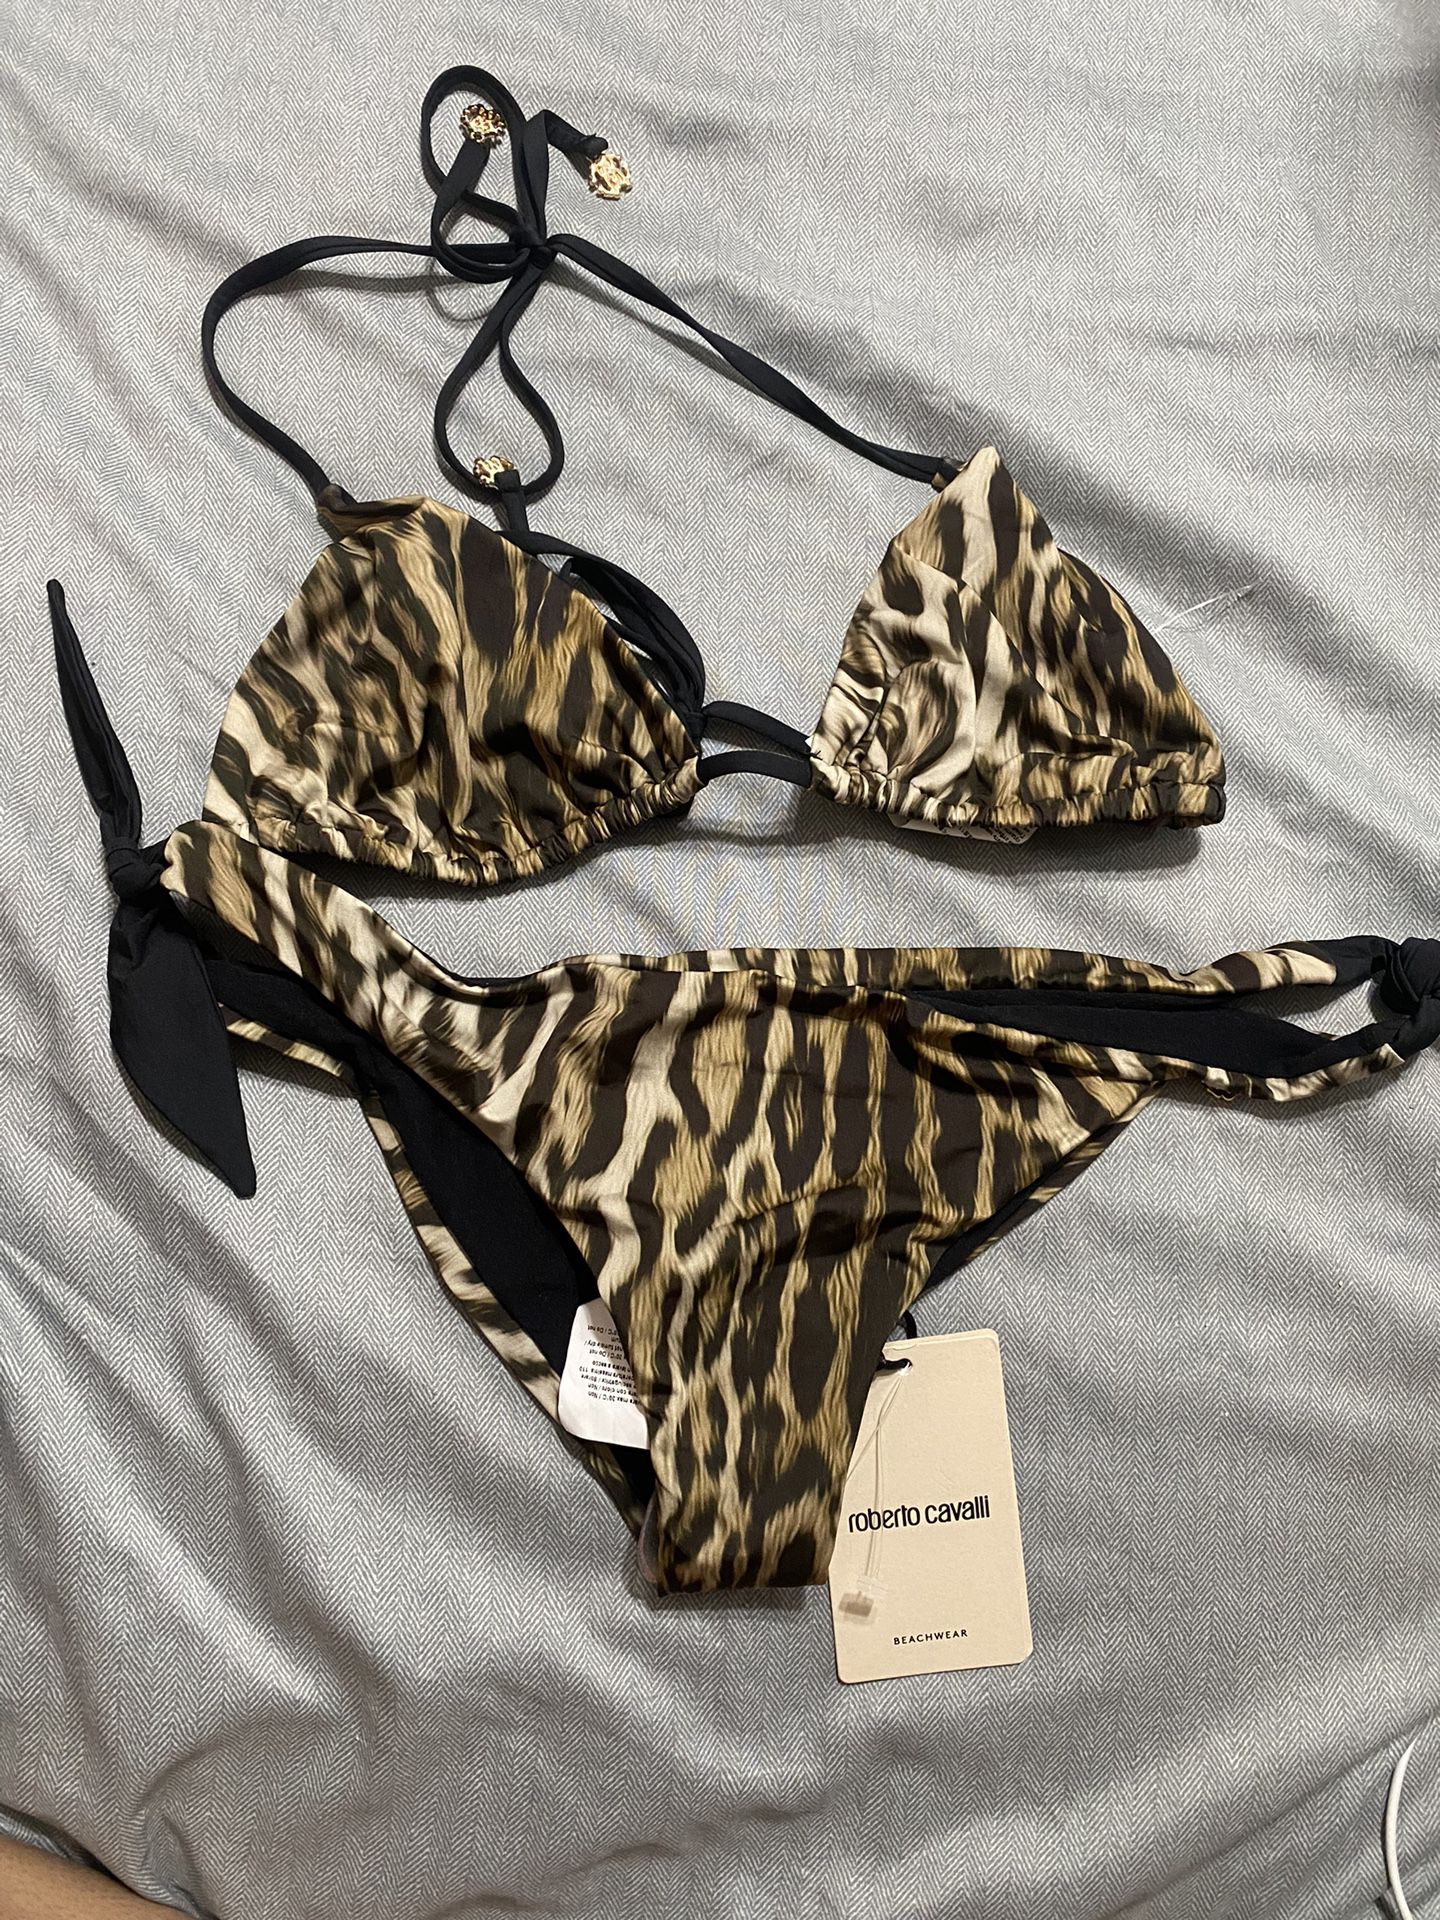 Roberto Cavalli  Cheetah  2 Pc NWT Bikini  Size M 